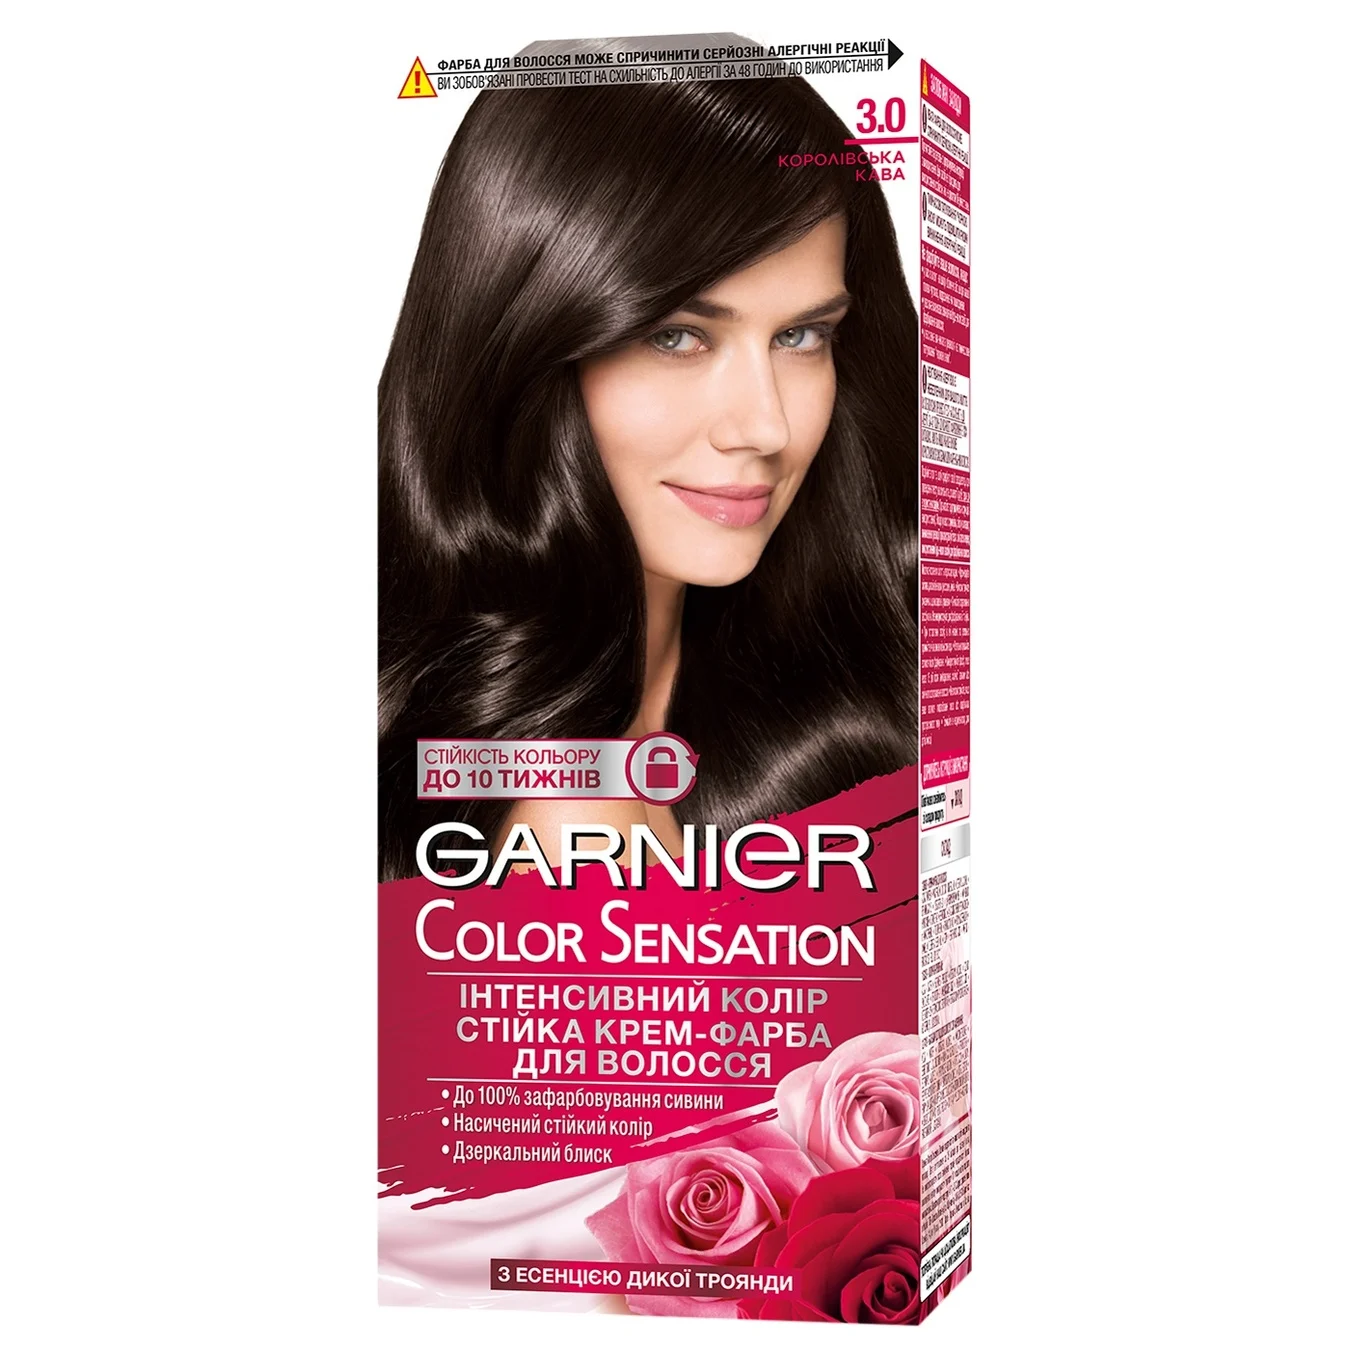 Hair dye Garnier Color Sensation 3.0 Intense color